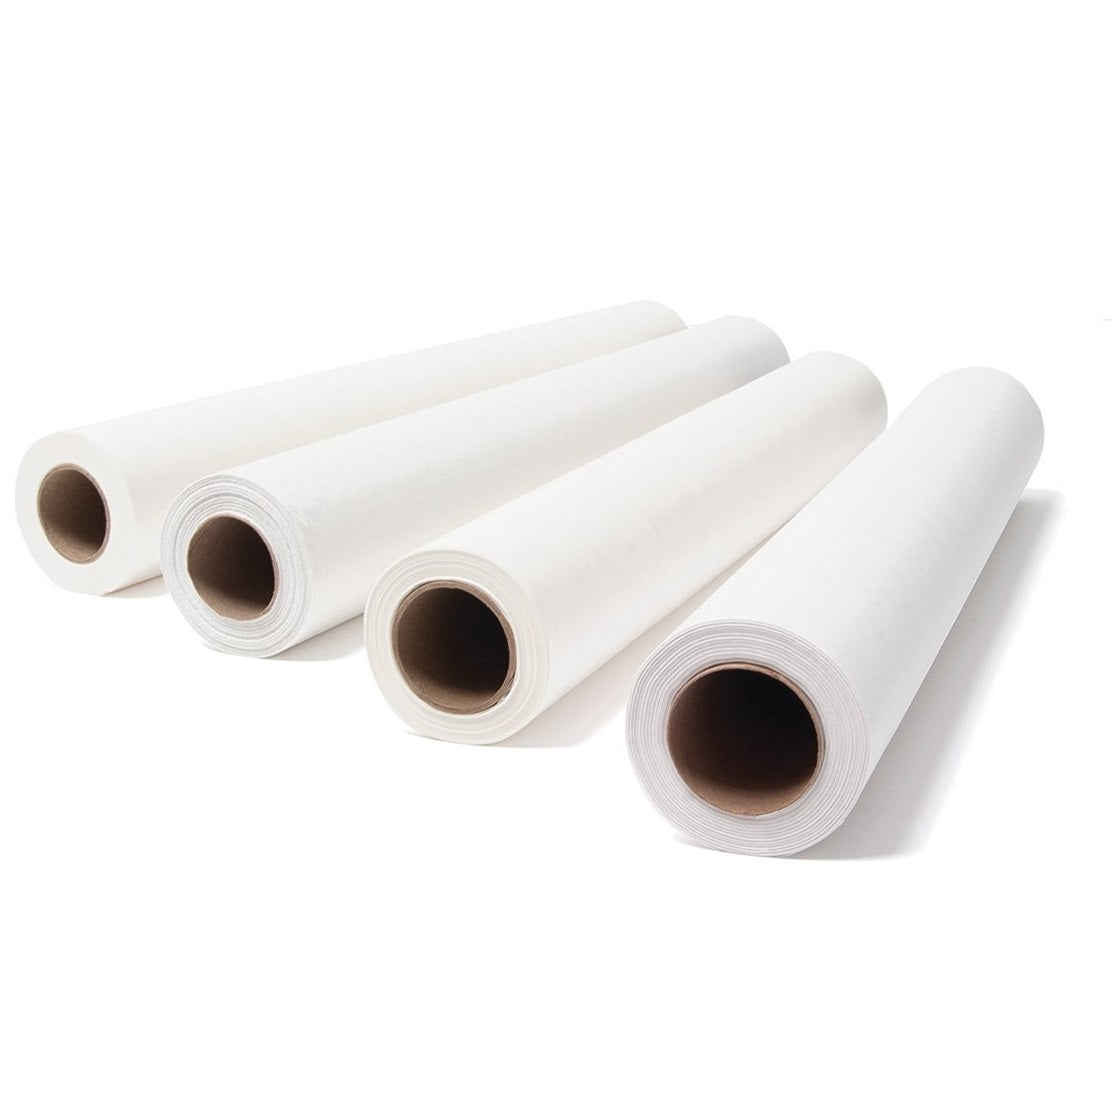 Crape Examination Table Paper – 12 rolls/case - physio supplies canada